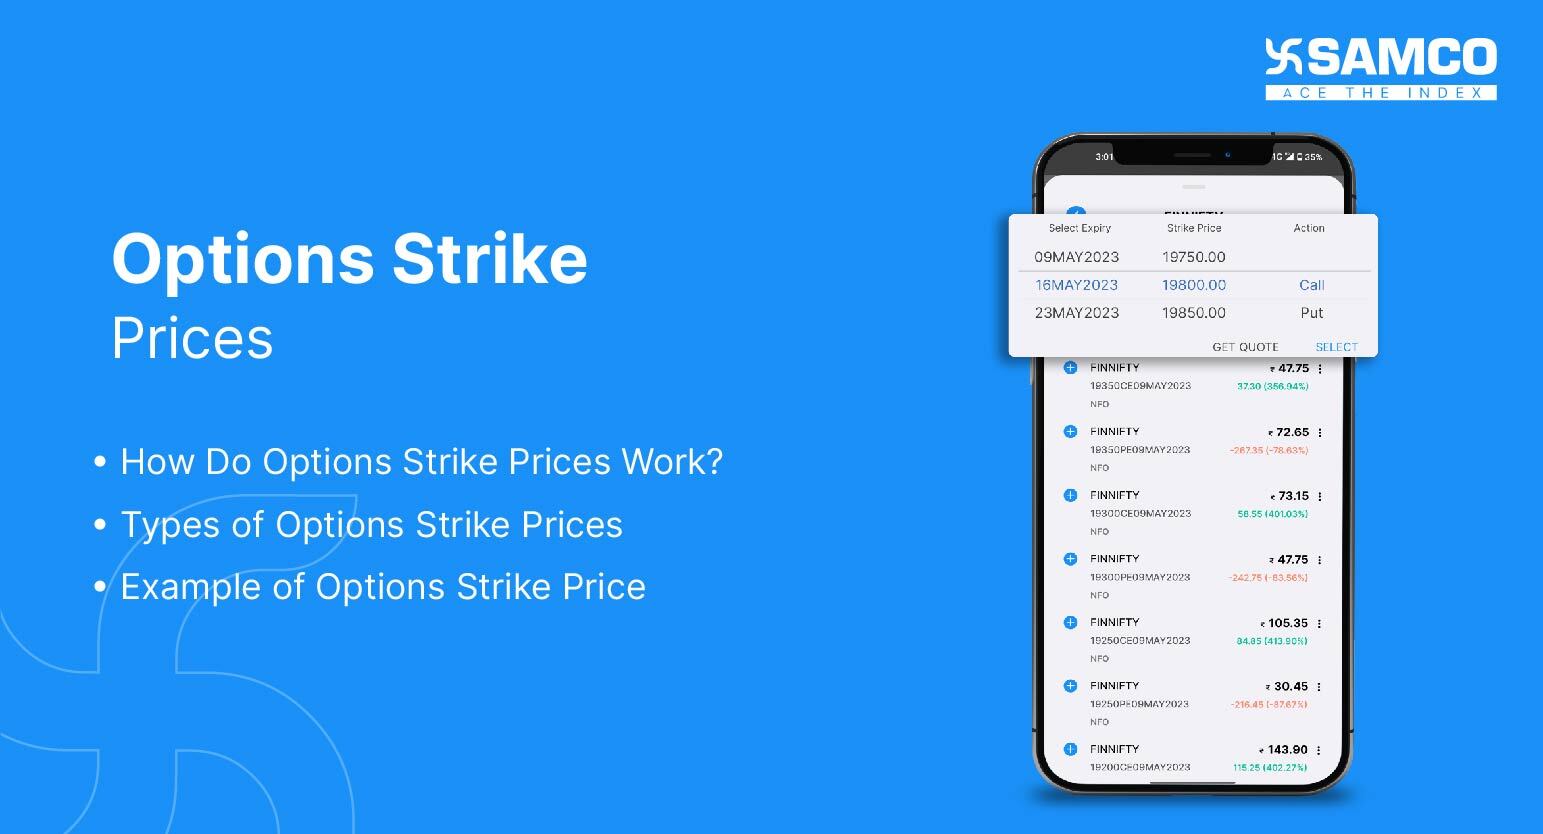 Options Strike Prices